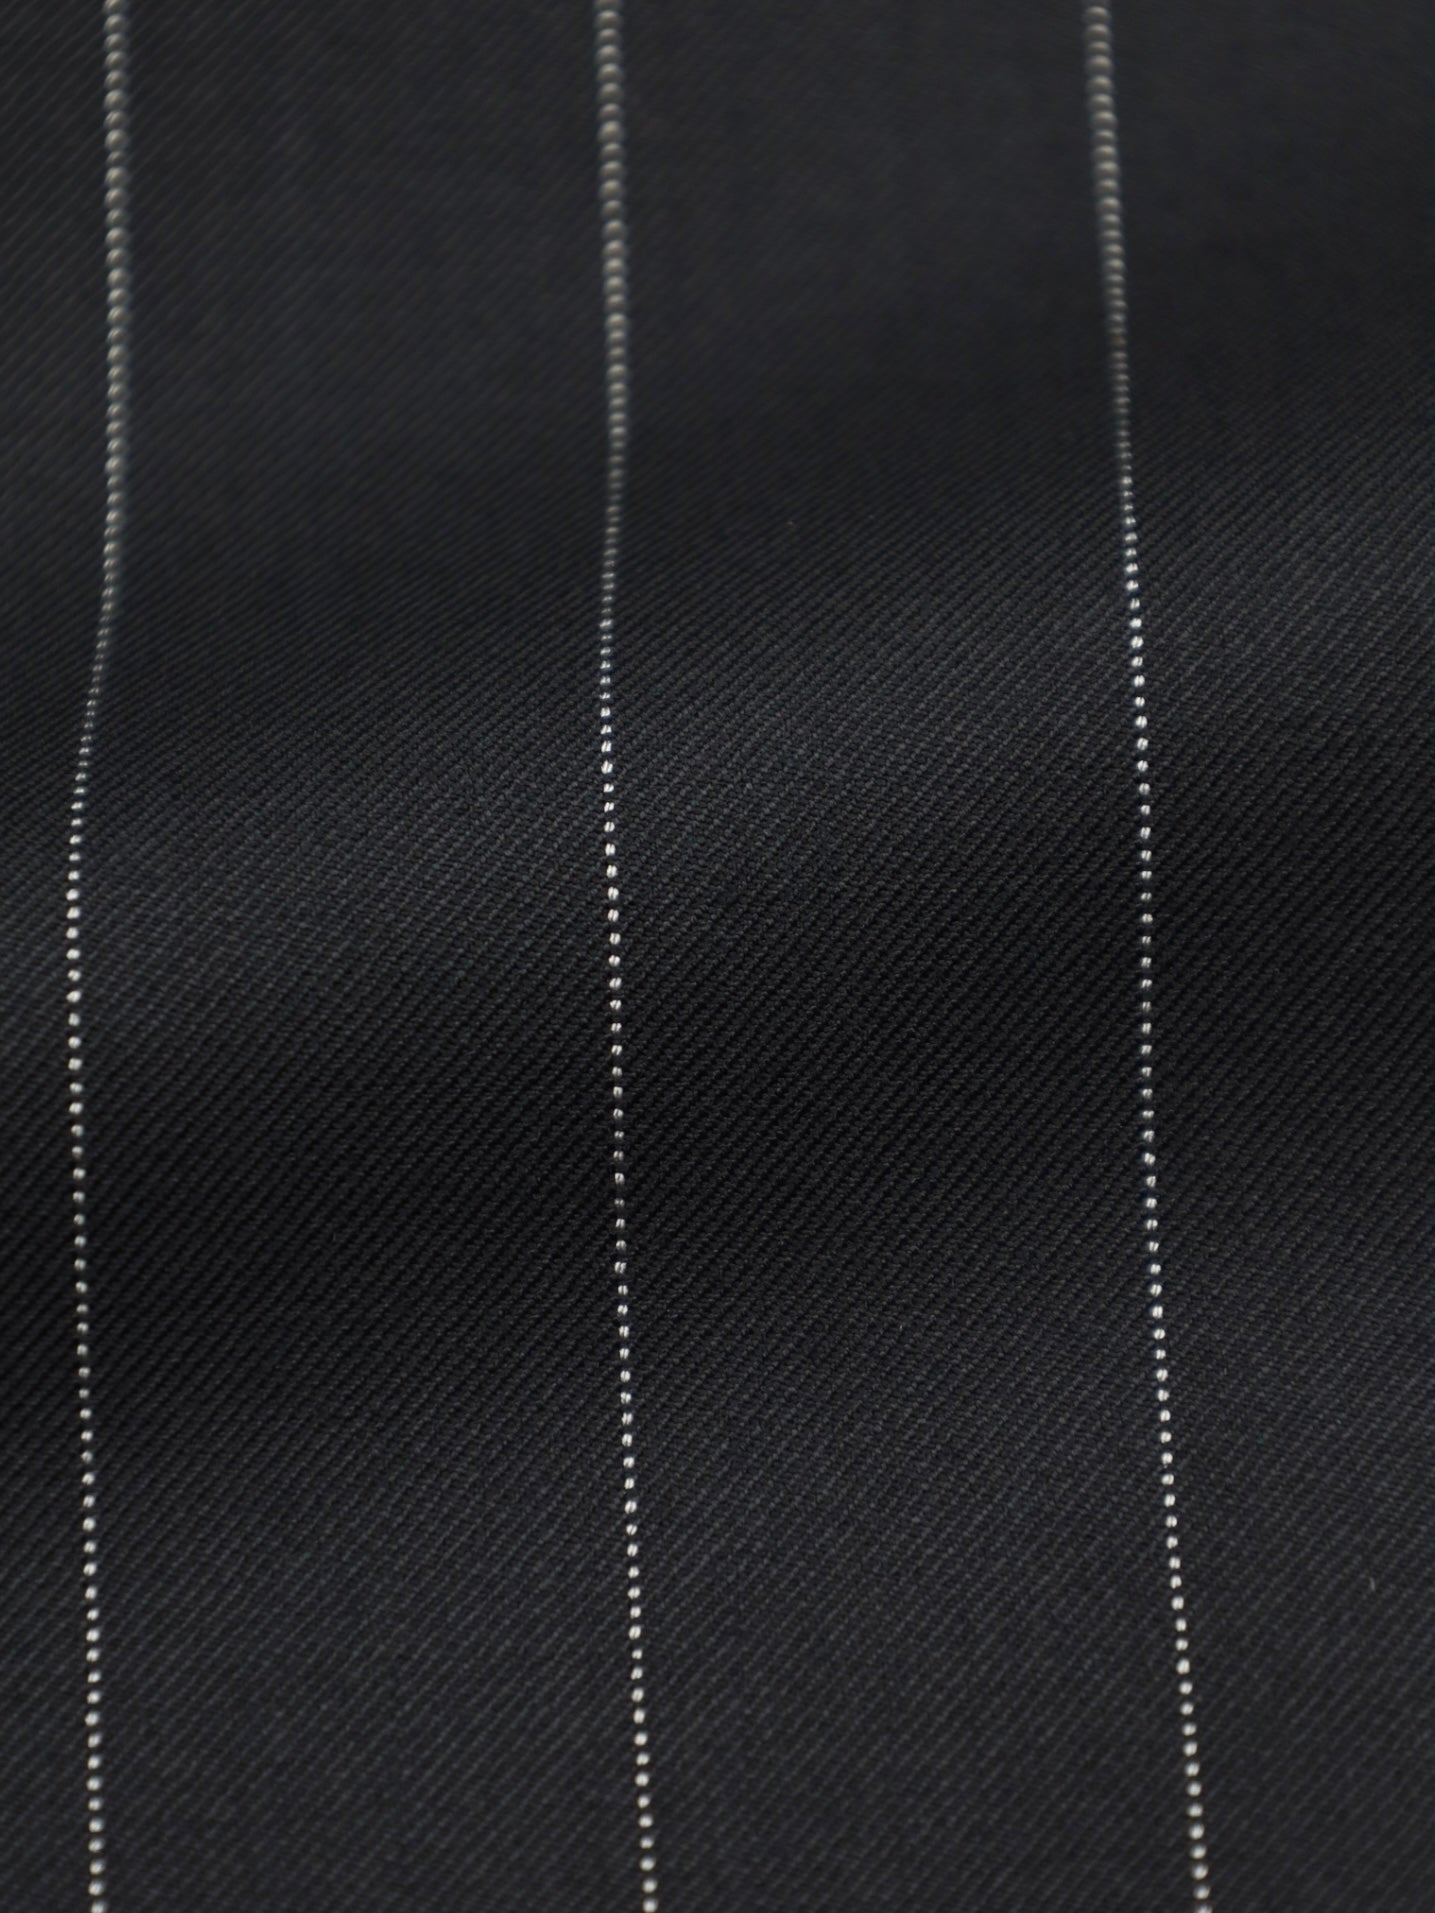 Cesare Attolini Black Super 160's Pinstripe Suit